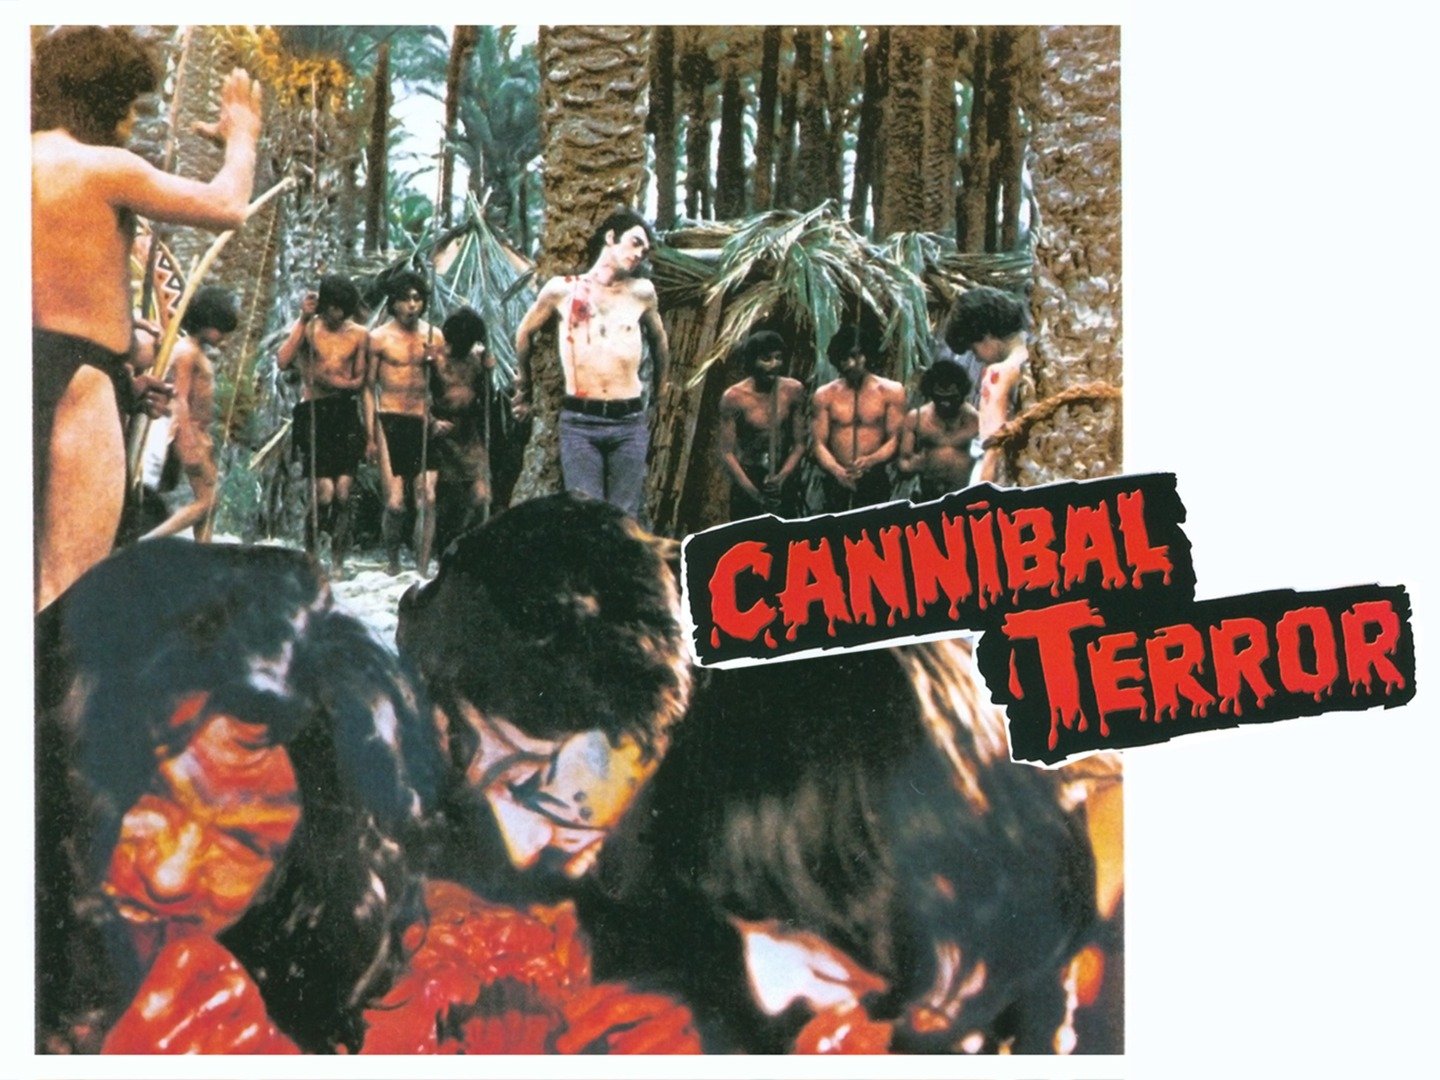 Cannibal Sex